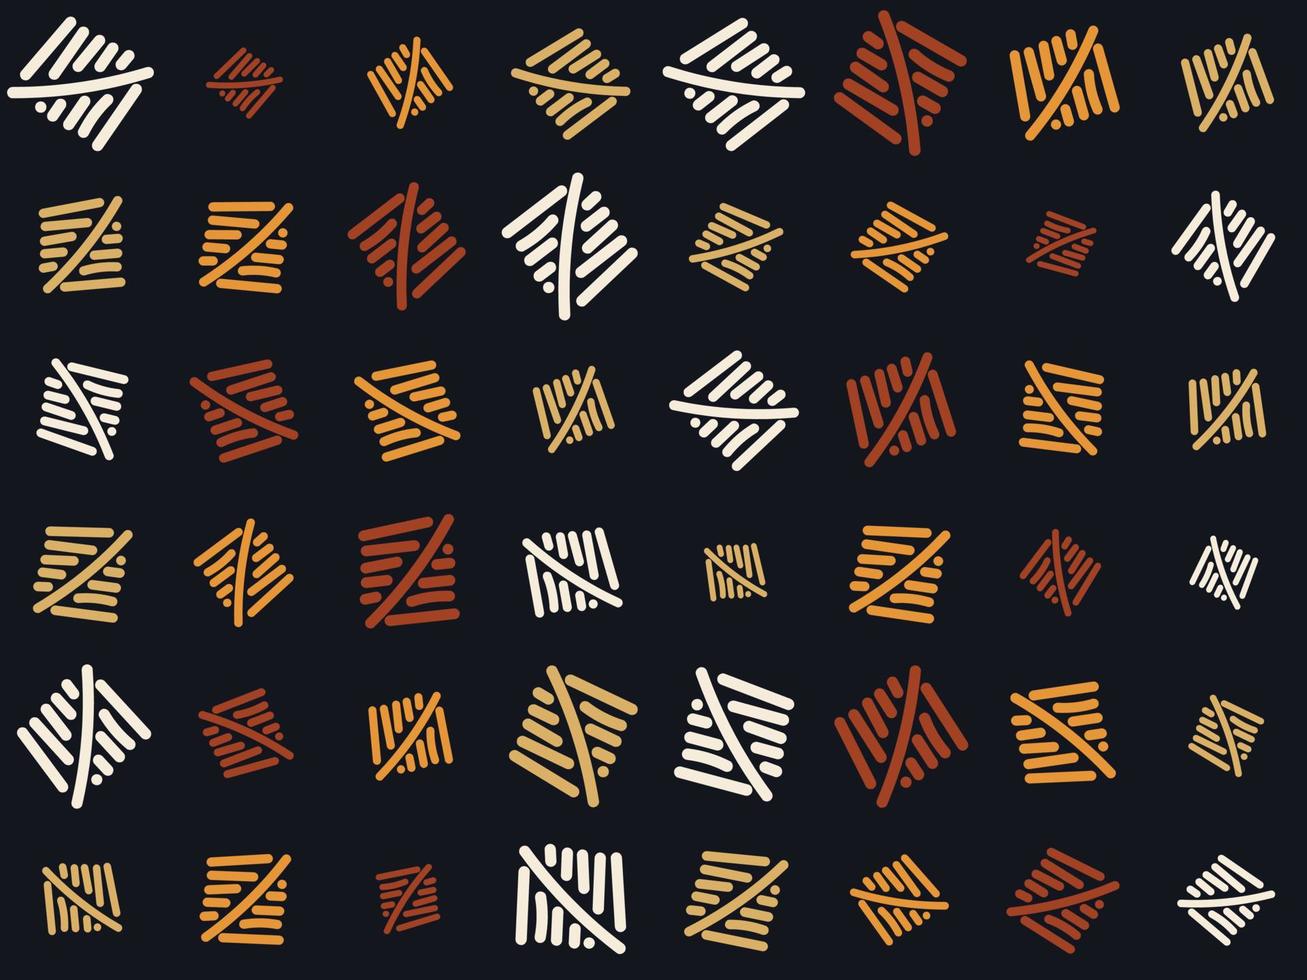 patrón de verificador de boceto a mano alzada. tela navajo diseño de patrón sin costuras tela étnica azteca alfombra mandala ornamento nativo boho chevron textil. vector